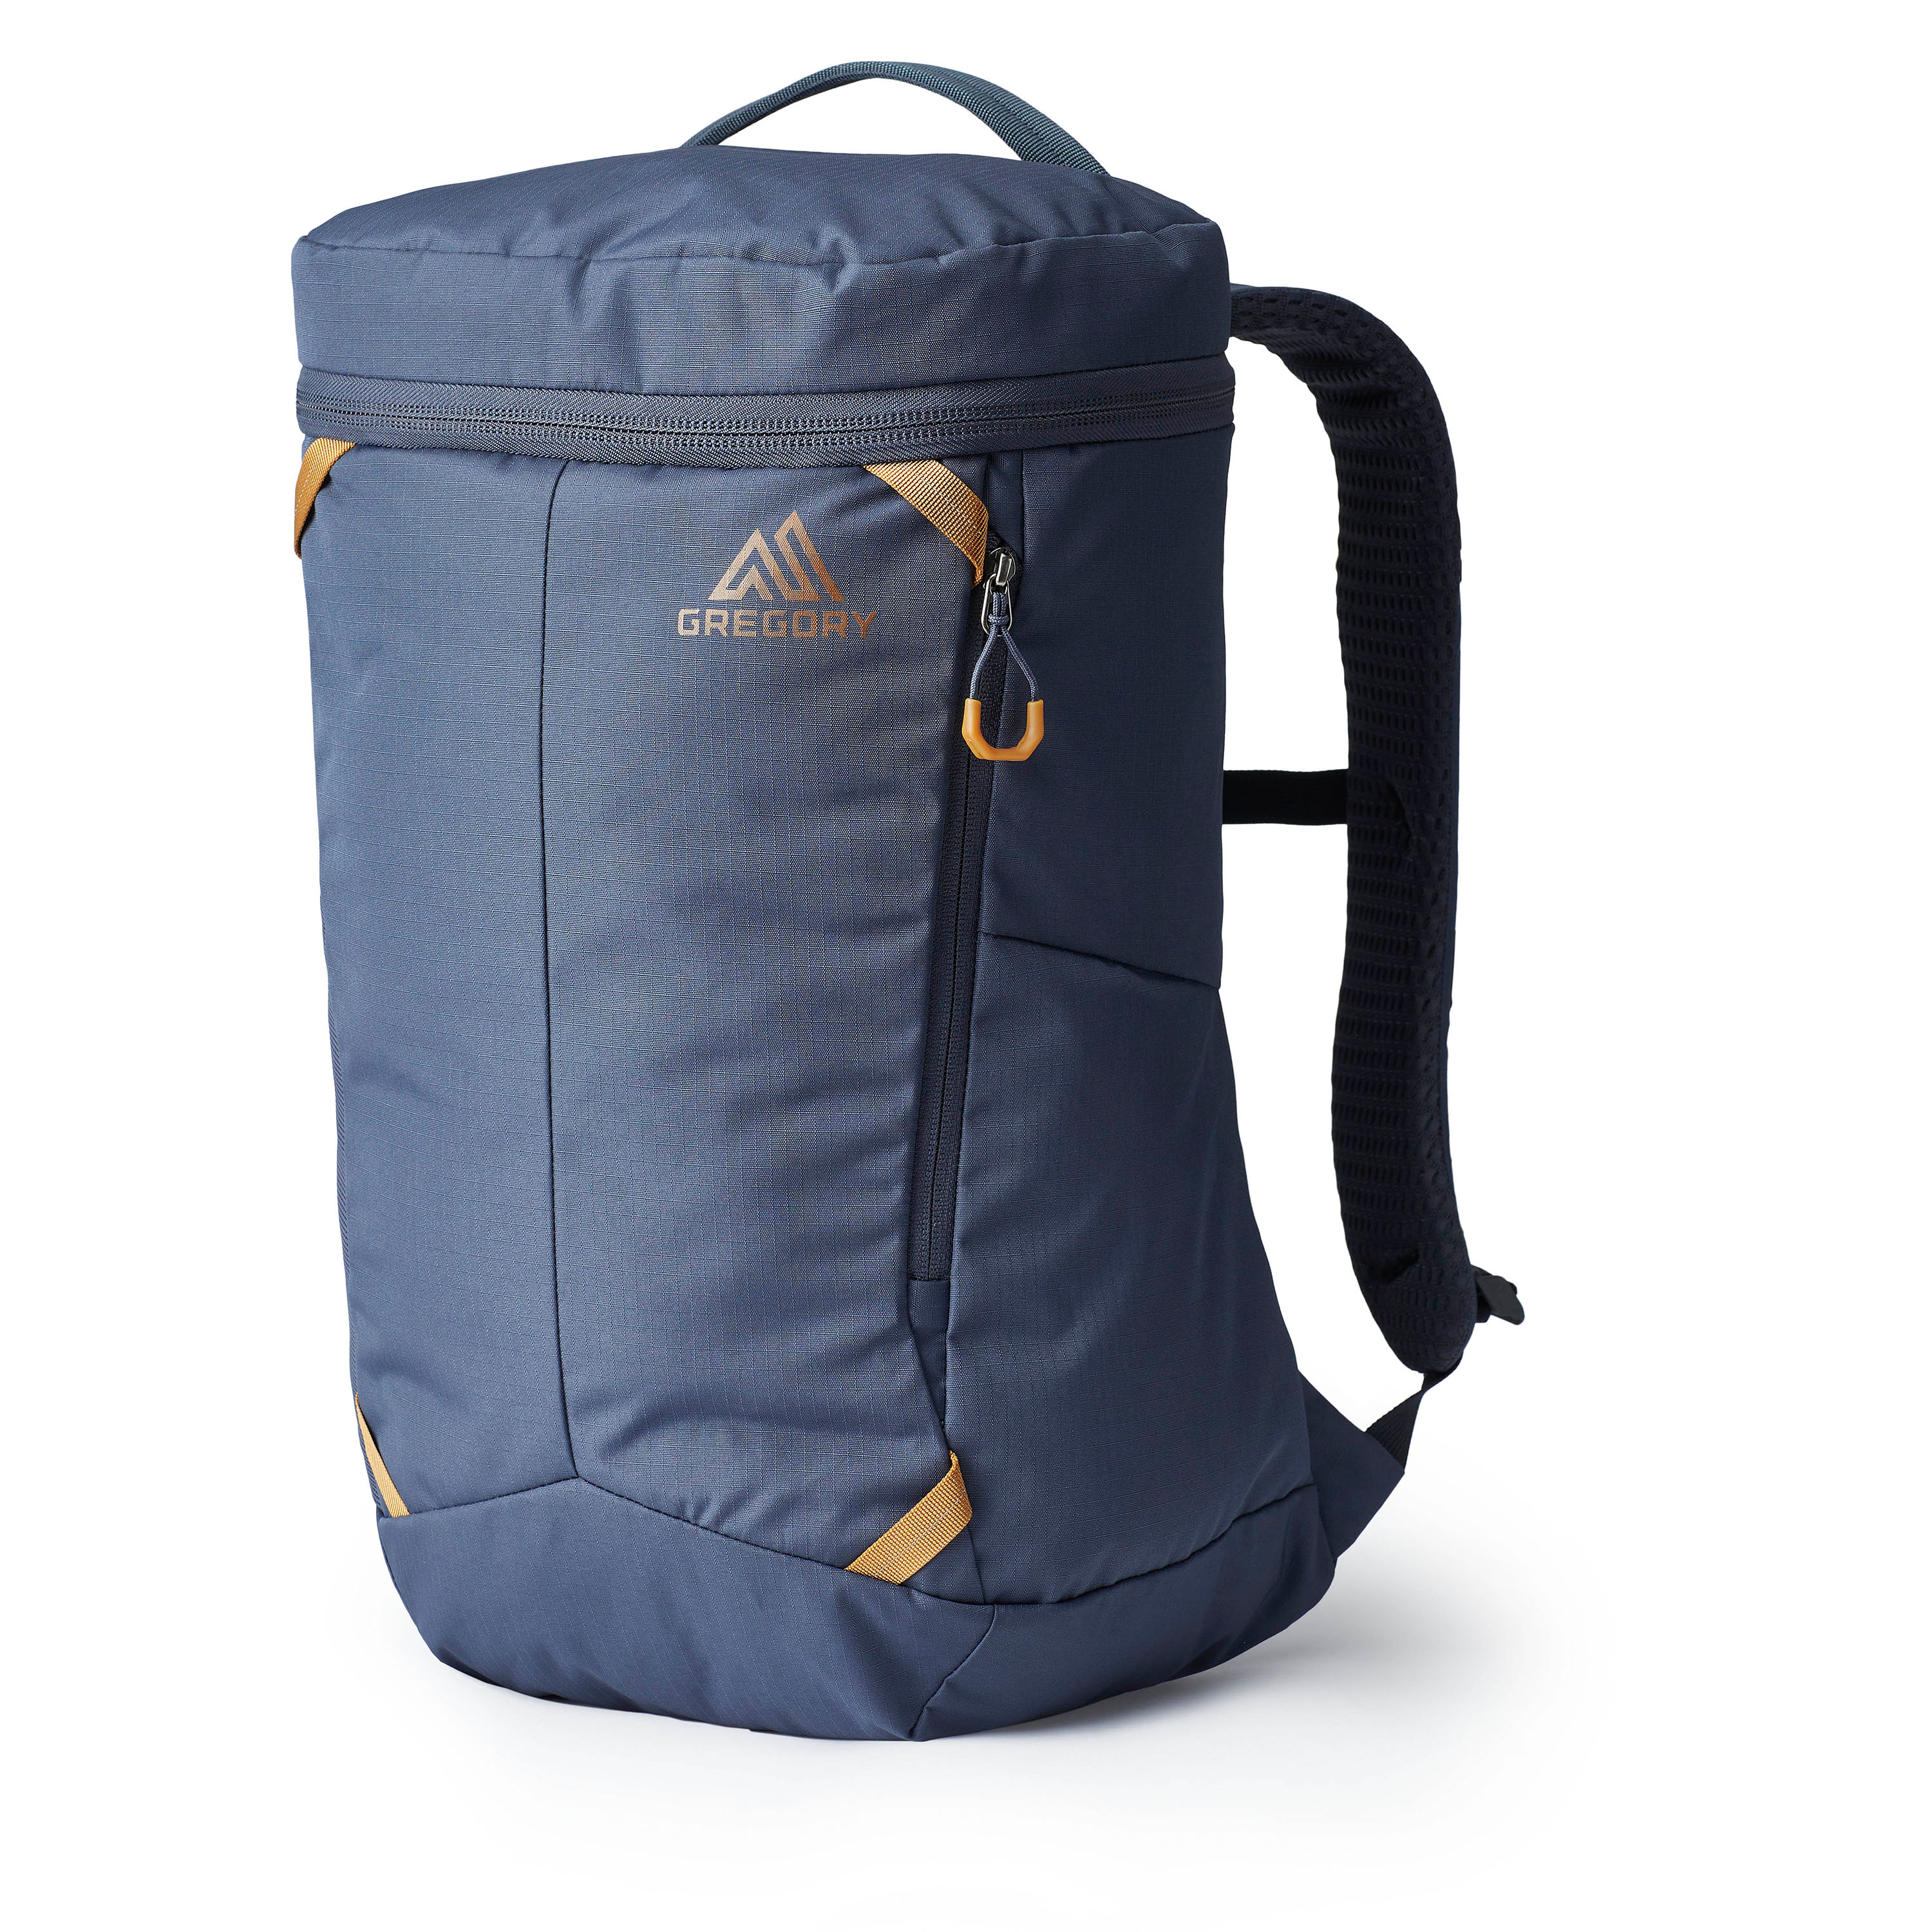 Gregory Rhune 25L Backpack